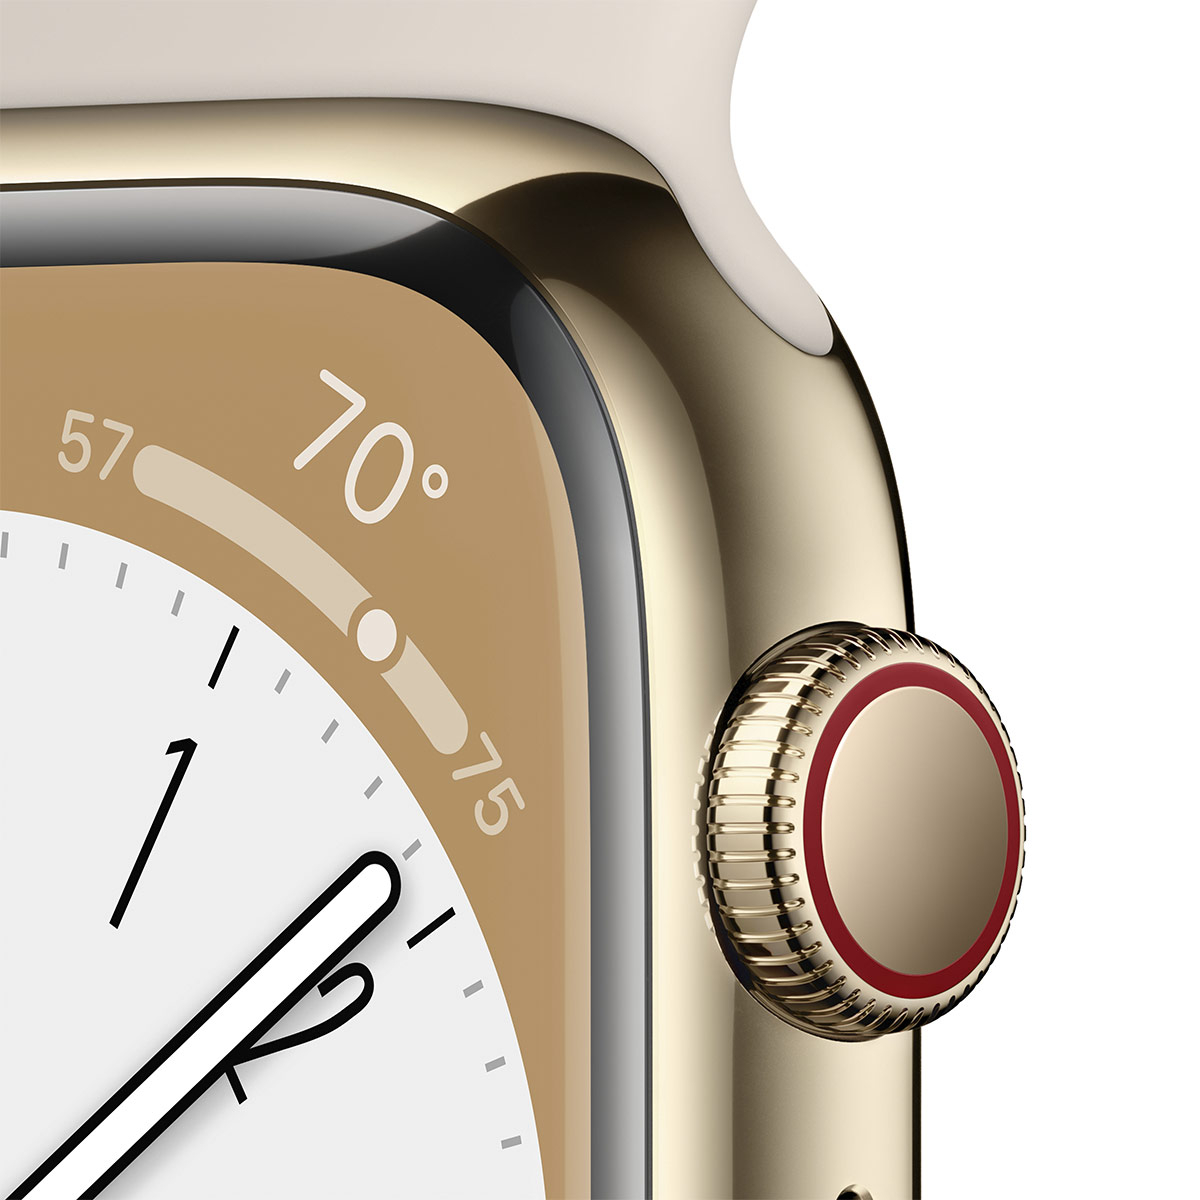 Apple - Smartwatch Apple Watch Series 8 GPS LTE 41mm Aço Inoxidável Gold com Bracelete Desportiva Starlight